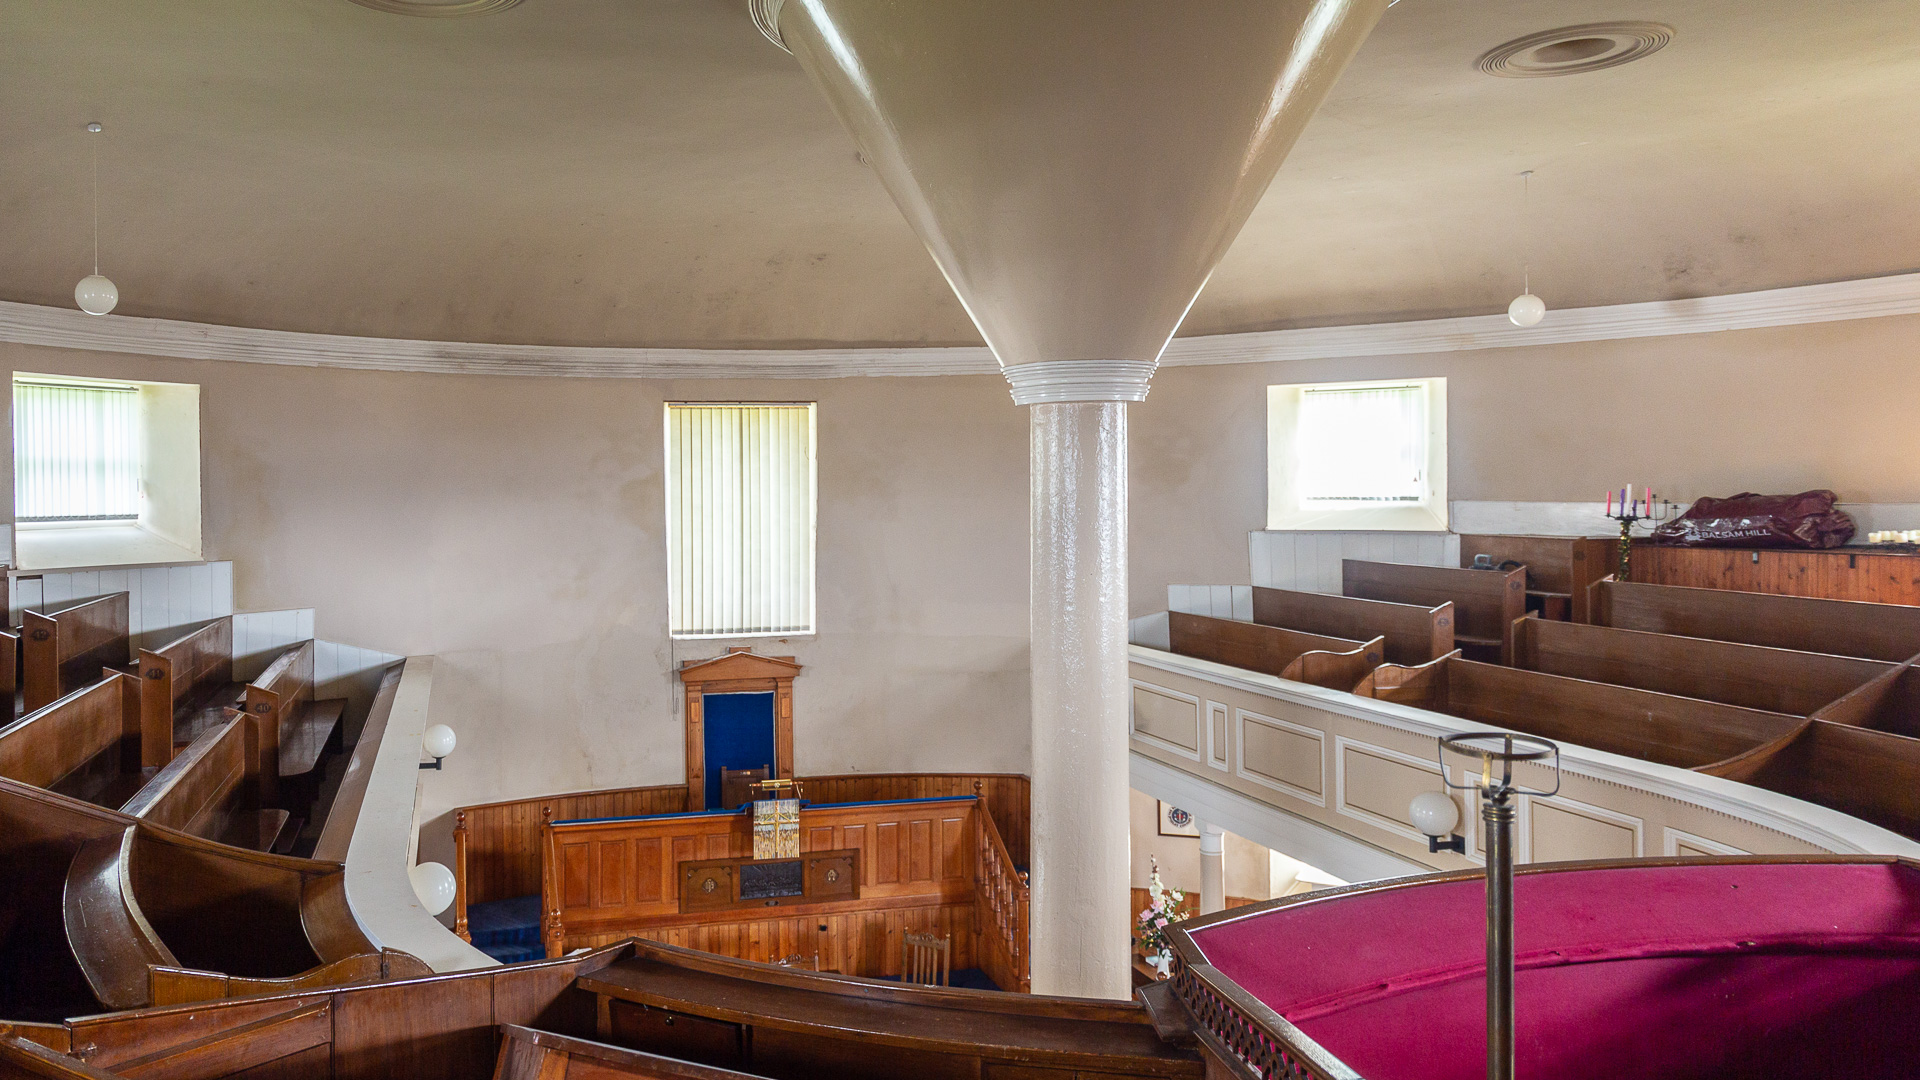 Kilarrow Parish Church